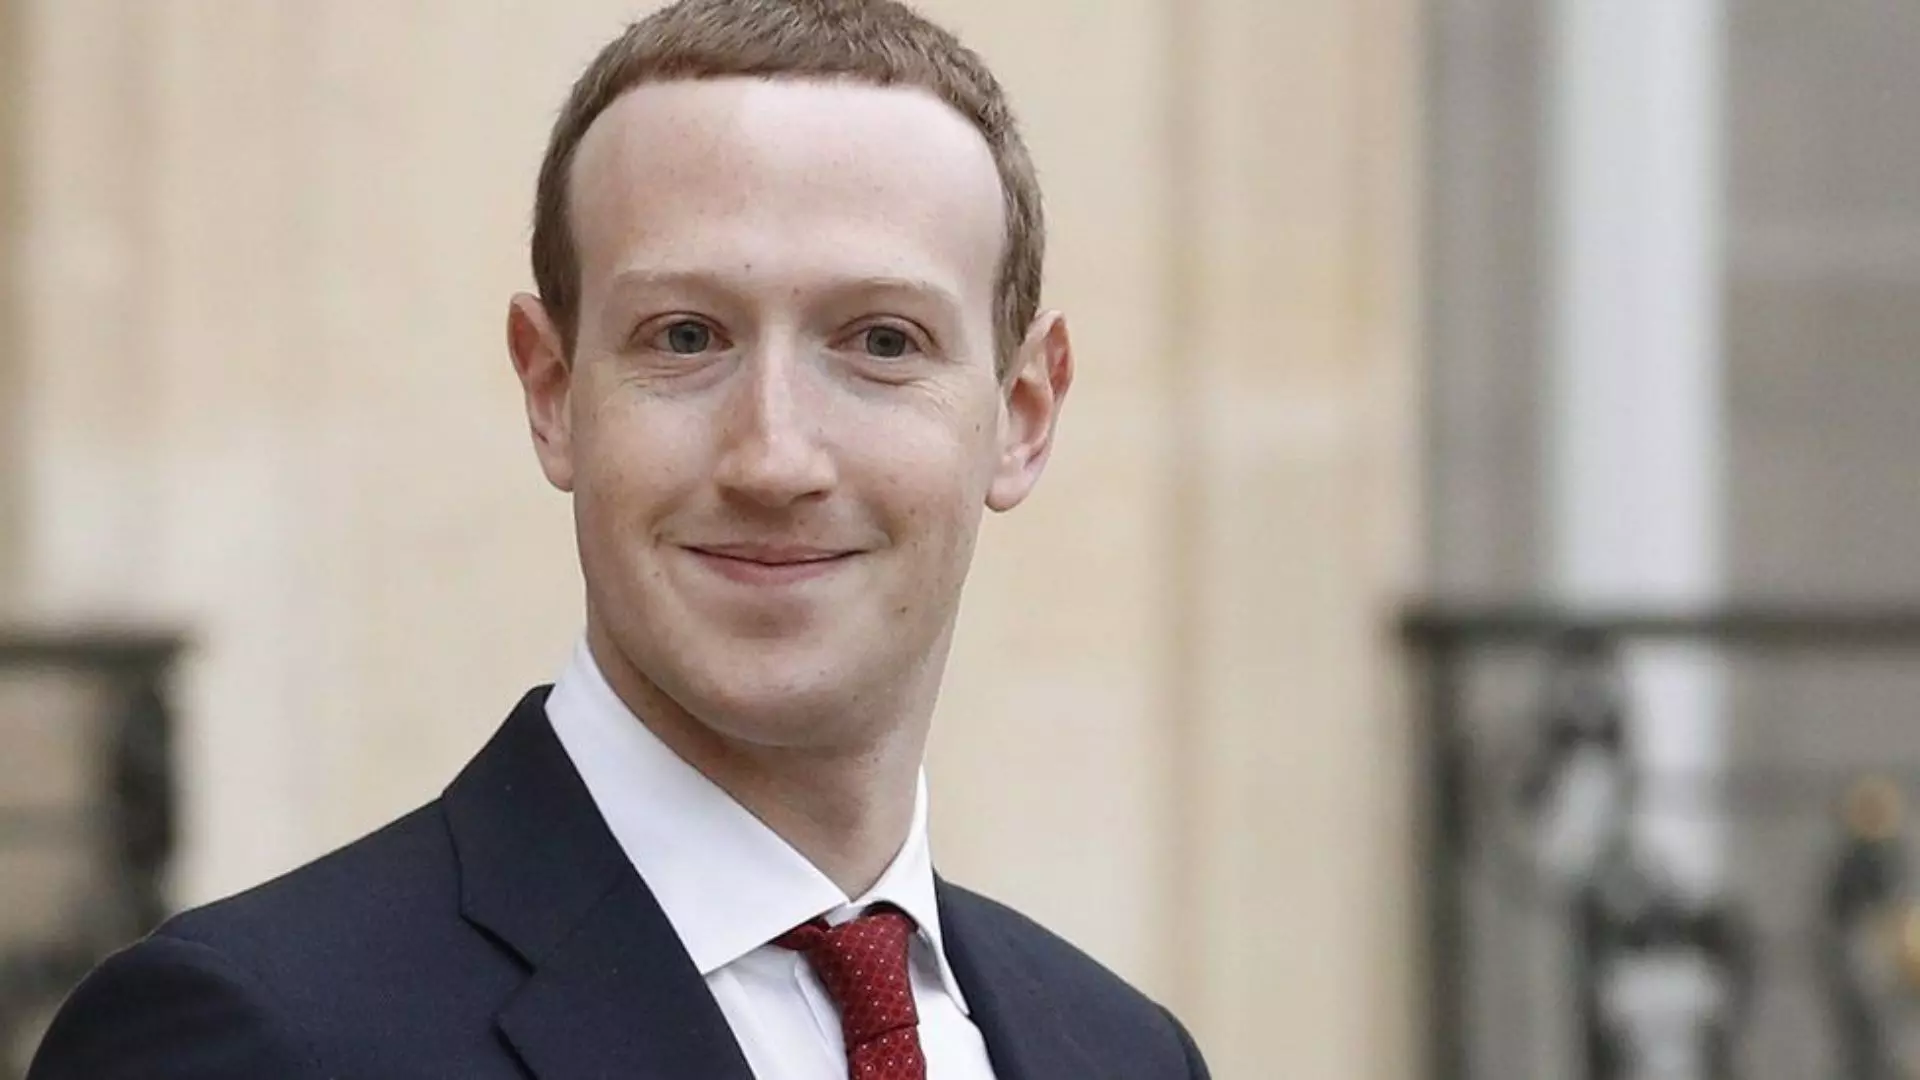 Colombia Police Announce 22 Crores to Handover Mark Zuckerberg